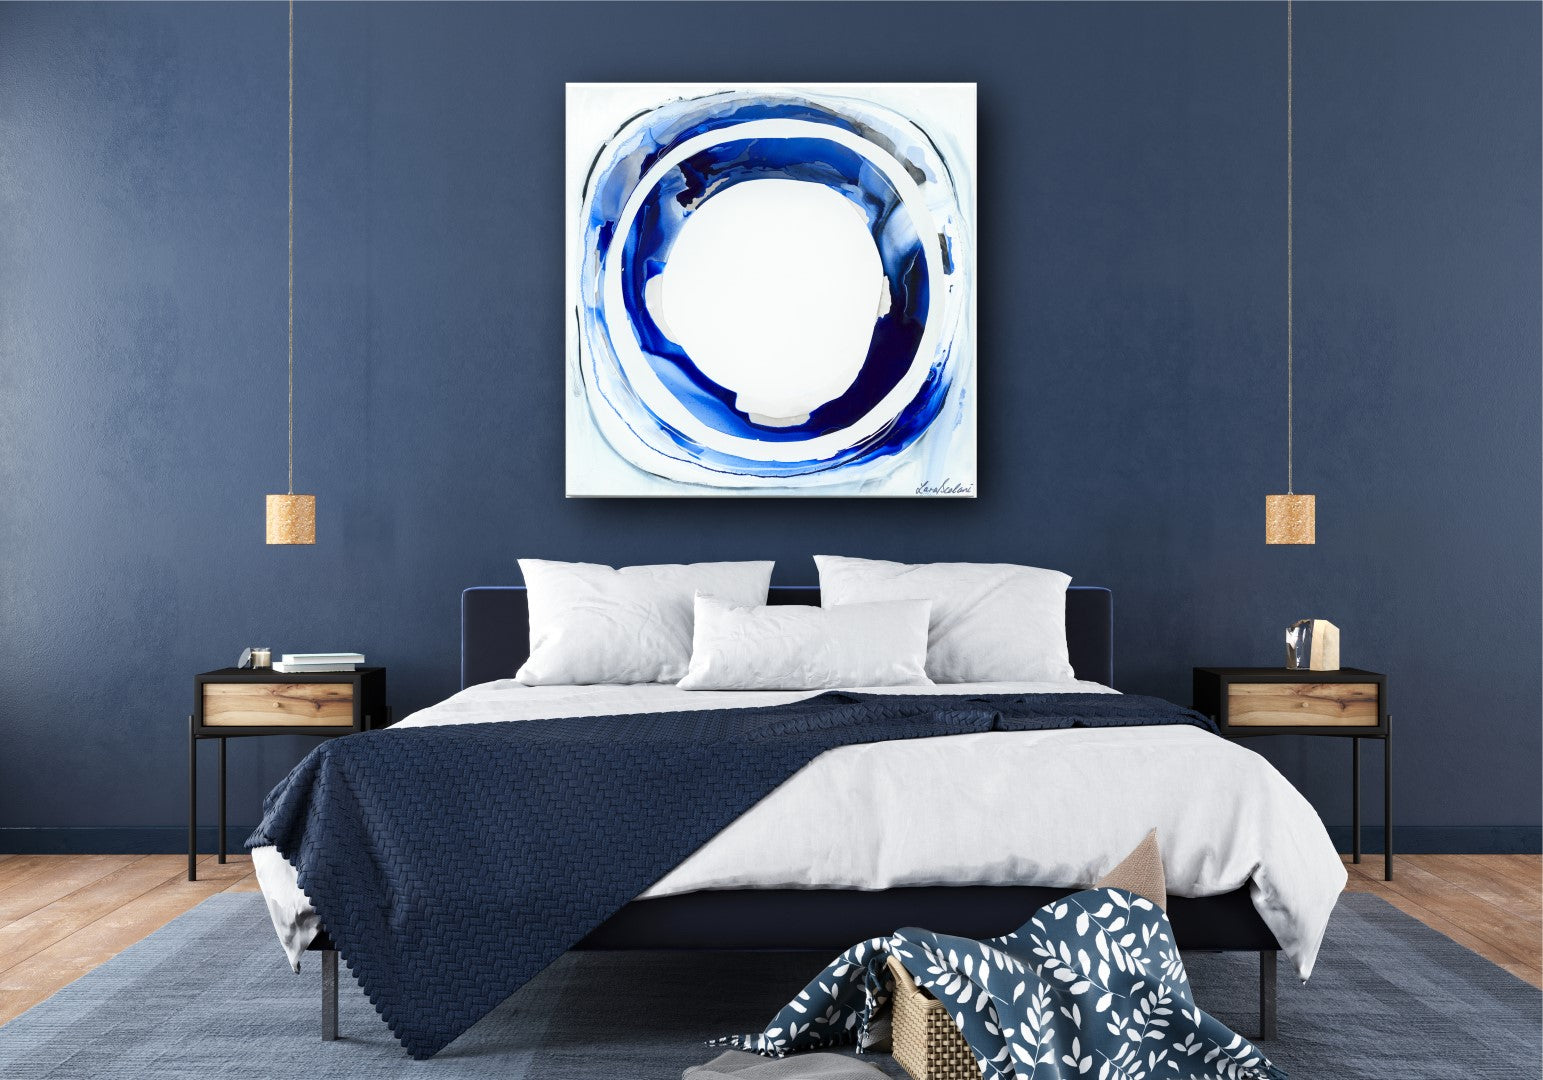 ethereal cobalt|blue|circle|fluid|australian art|lara scolari|abstract art|australia|fluid|ink|lara scolari|Organic|Artwork|Balmain|Styling|lara scolari